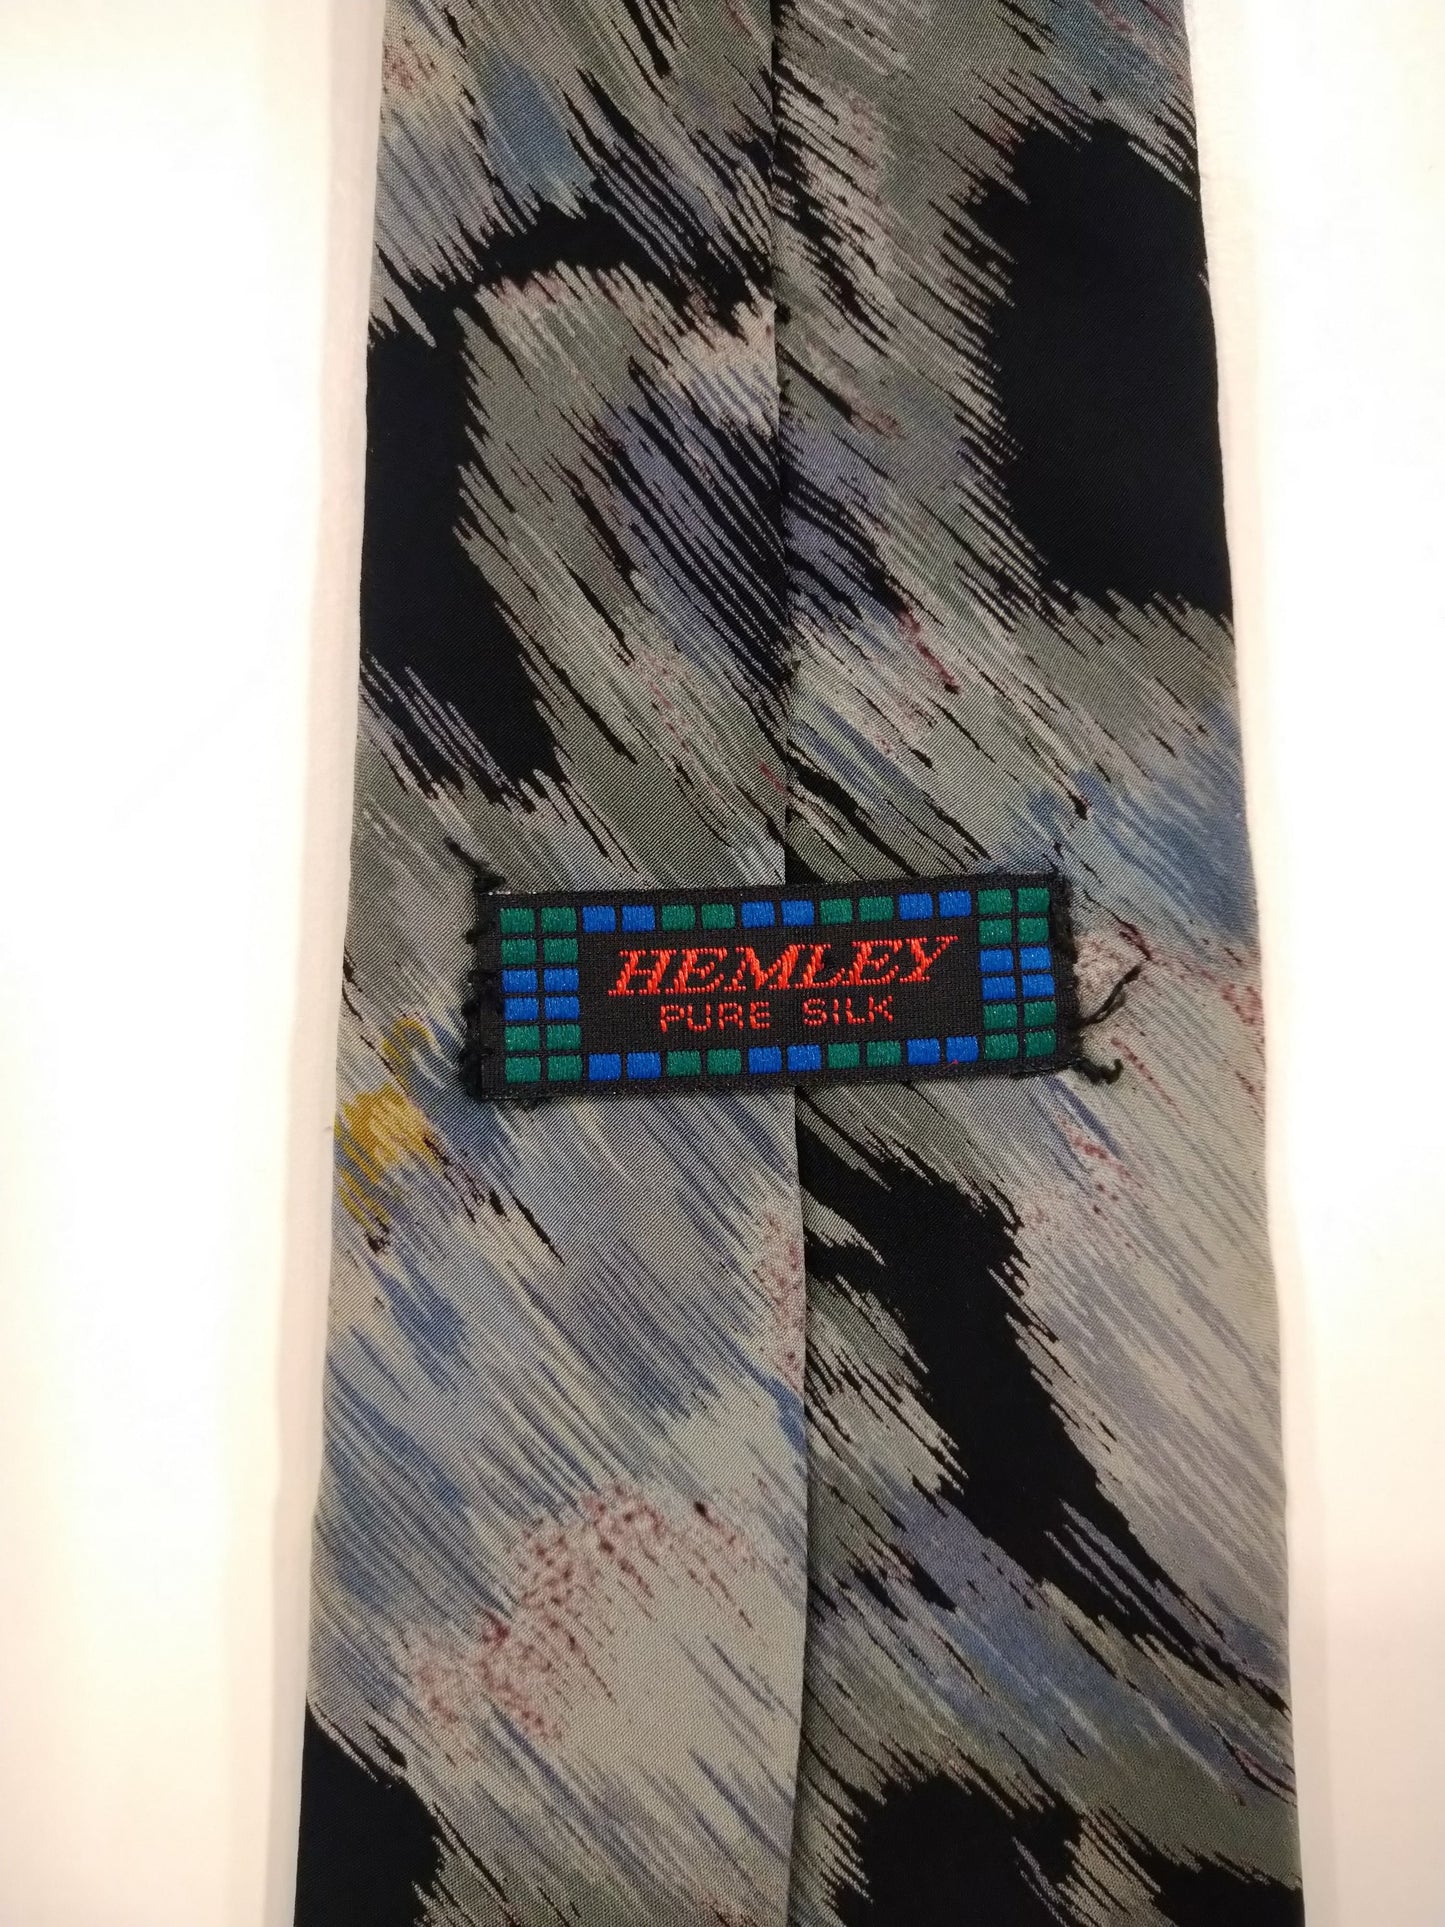 Cravate latérale Hemley. Beau motif.